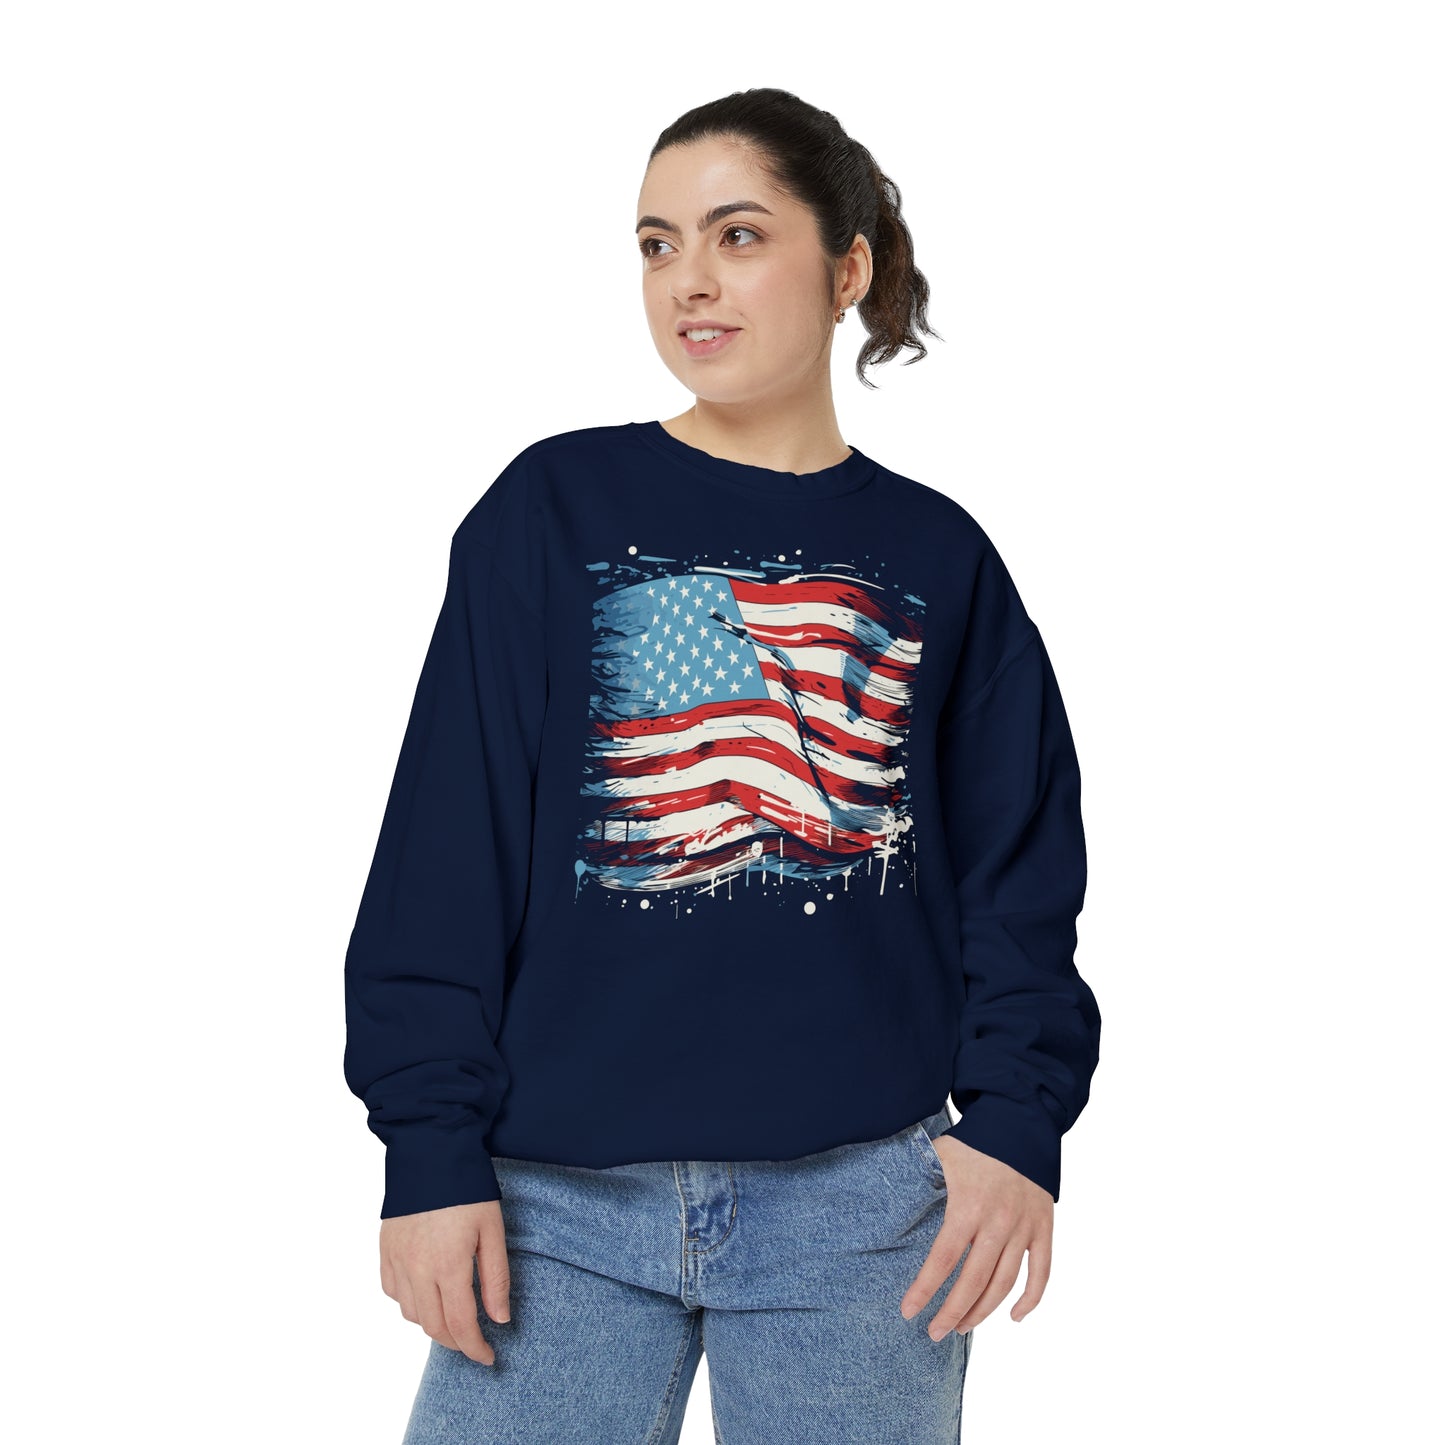 American Flag Sweatshirt, USA Navy Graphic Crewneck Fleece Cotton Sweater Jumper Pullover Men Women Adult Aesthetic Designer Top Starcove Fashion